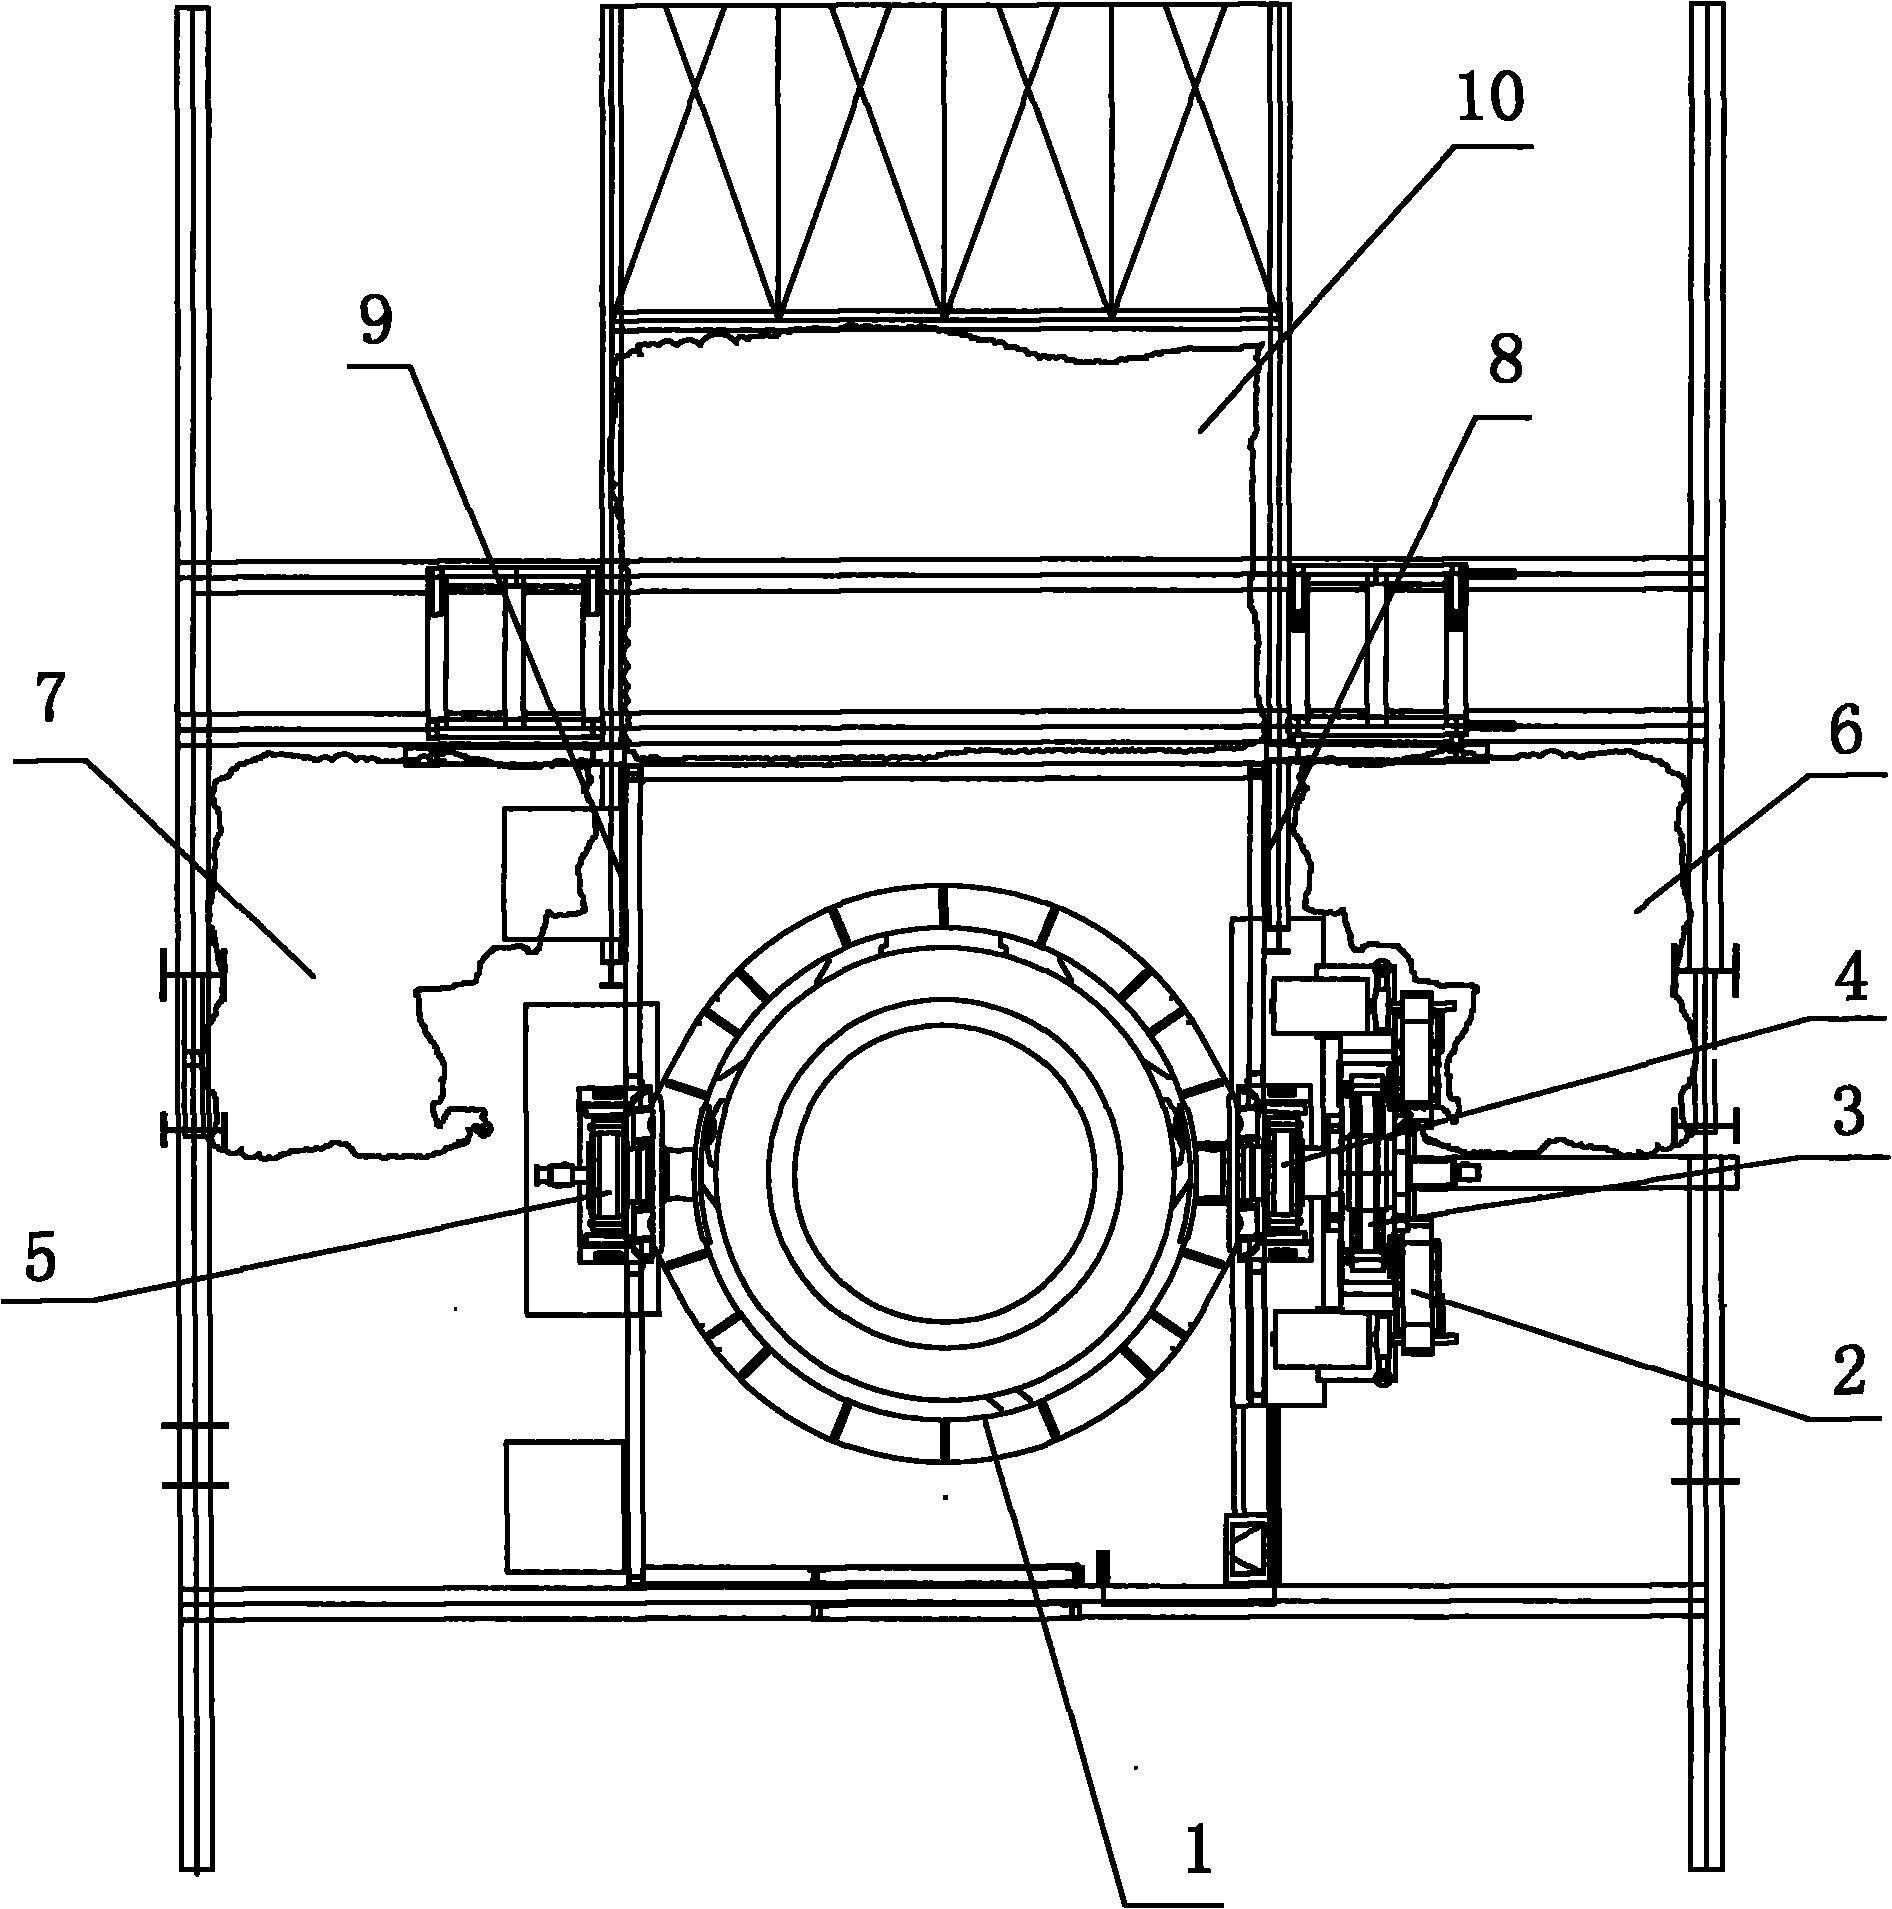 Method for replacing rotating furnace